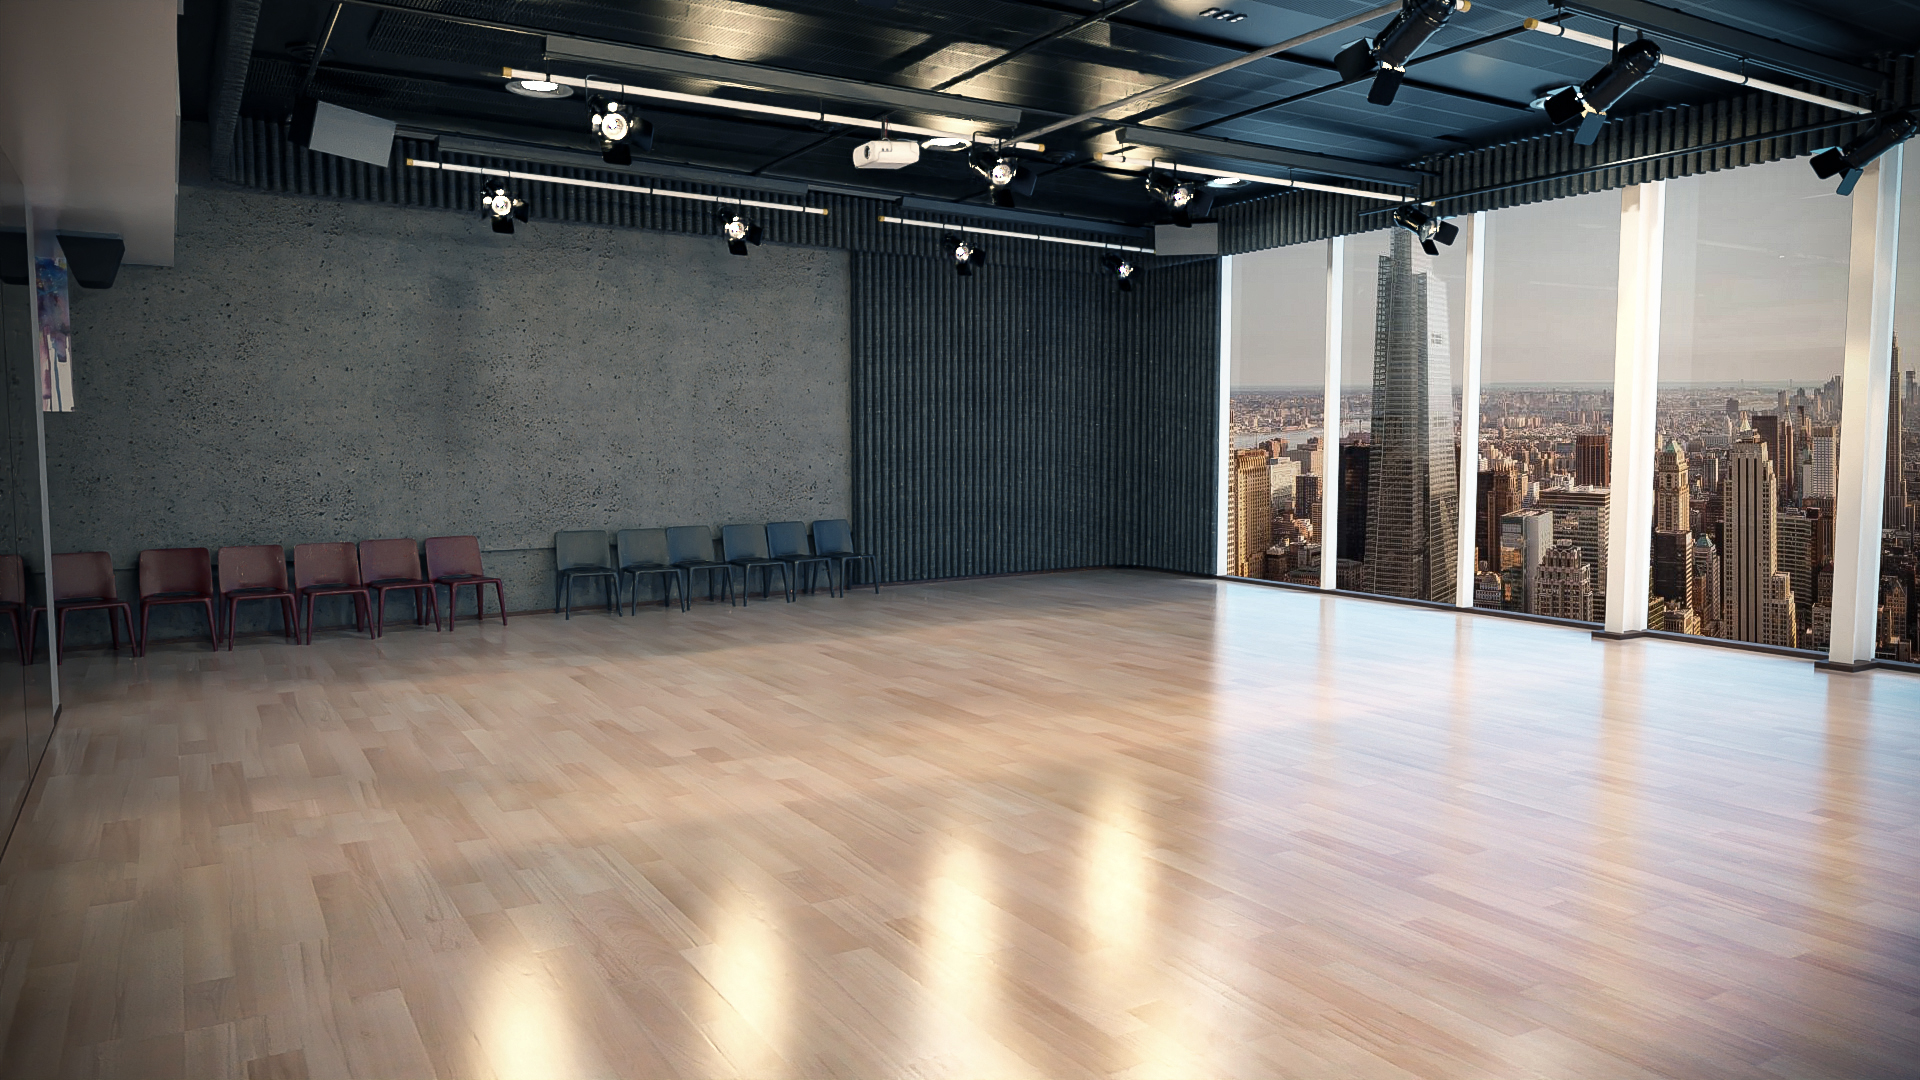 Dance Art Studio by: Tesla3dCorp, 3D Models by Daz 3D